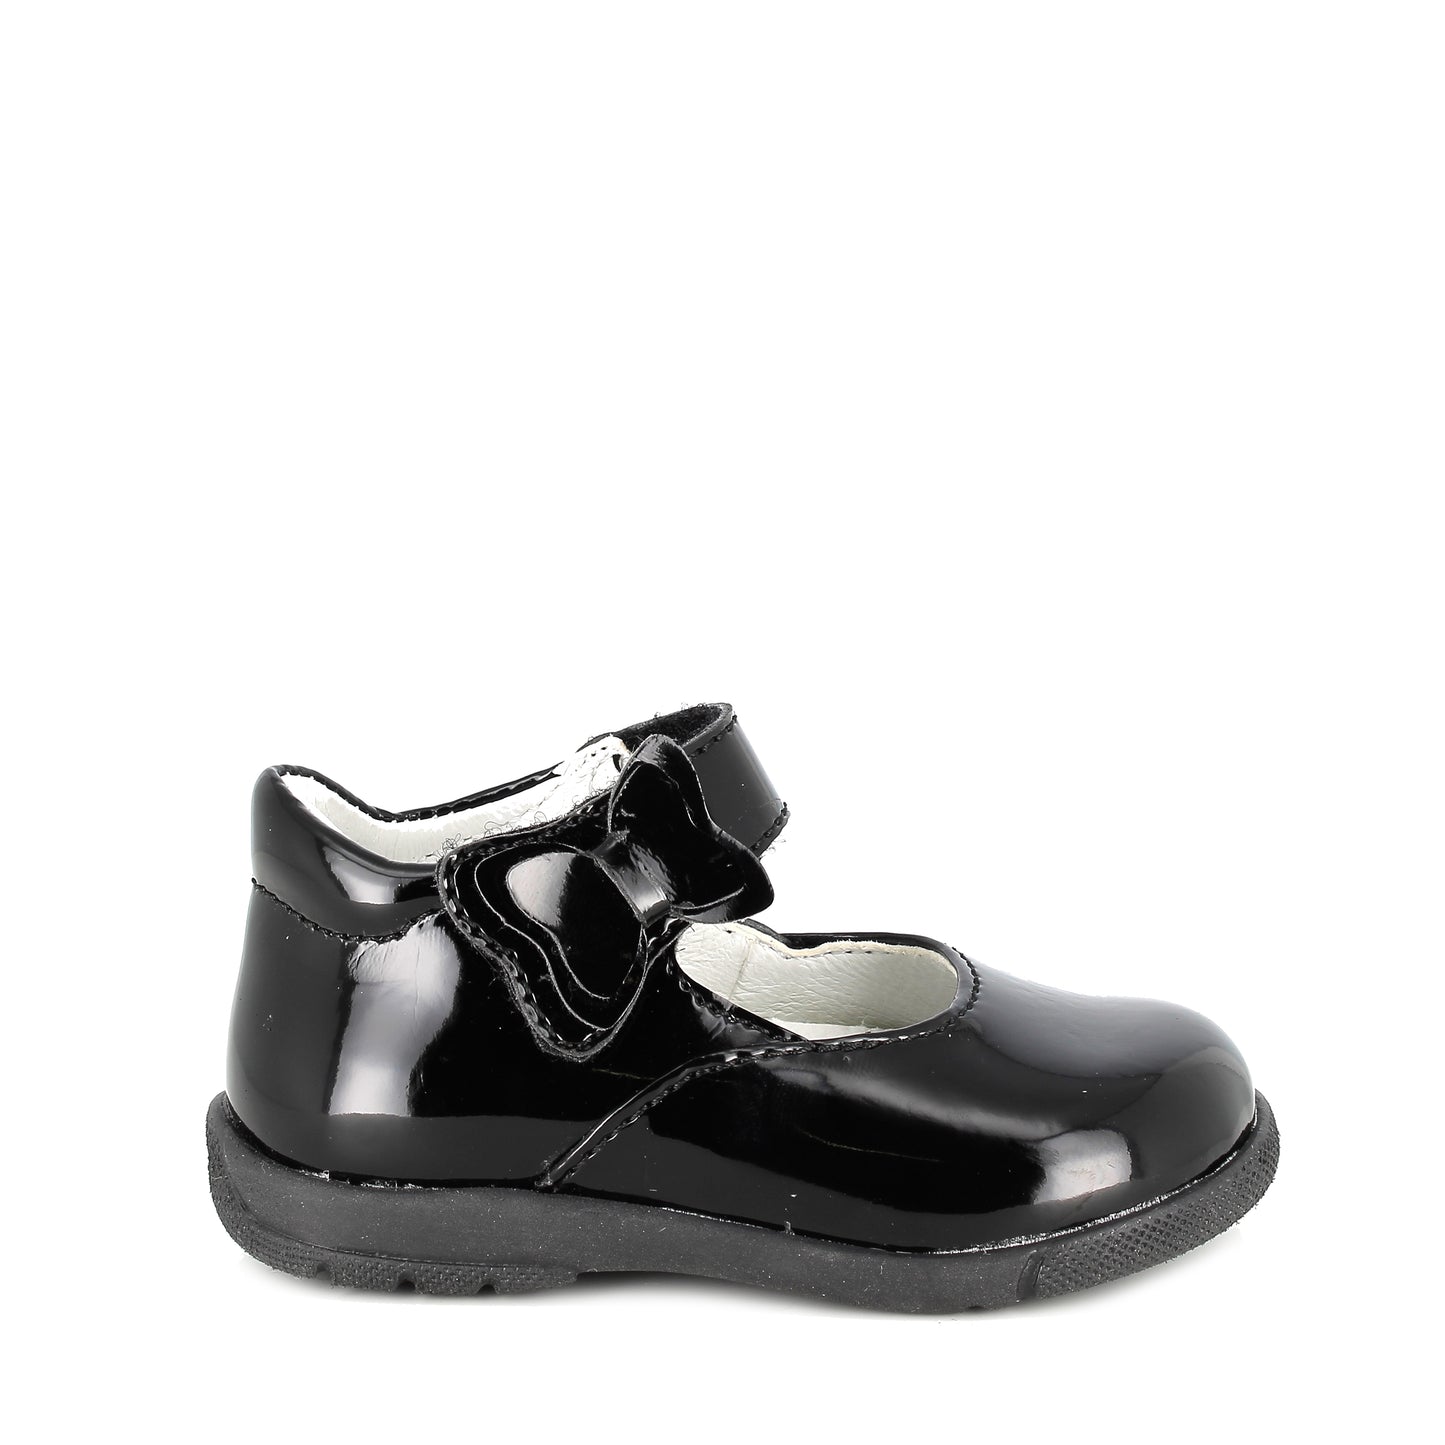 Primigi | 4901200 | Baby | Girls Velcro Shoe | Black Patent